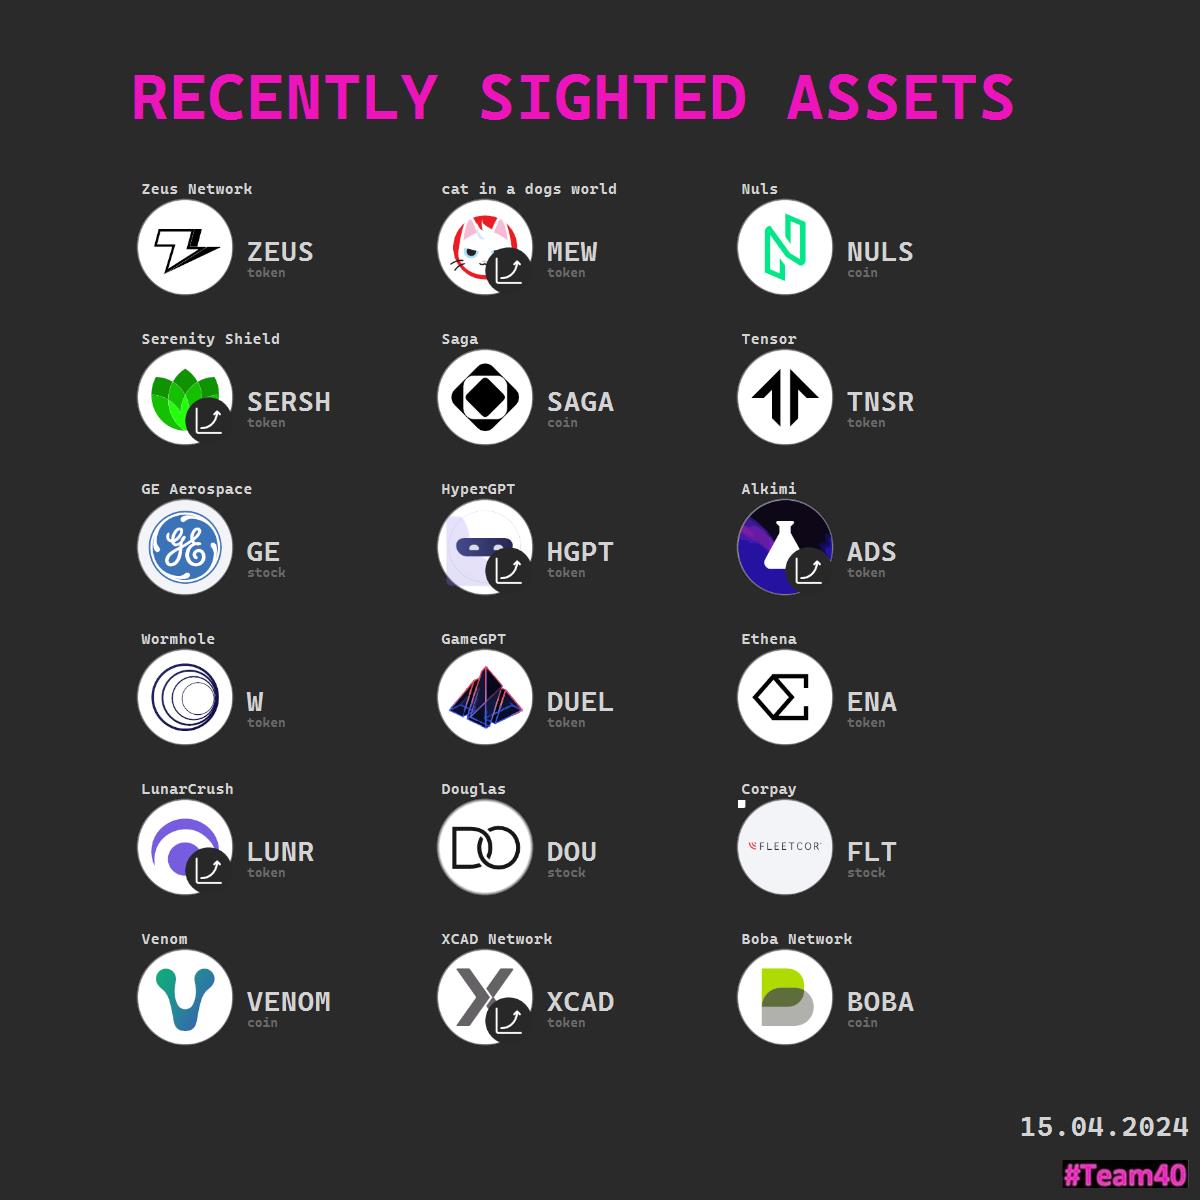 Spottet assets on @Bitpanda 🔍

(Already listed or soon to be listed.)

#Assets #Crypto #Stocks #Metals #Commodities #Bitpanda #Broker @Bitpanda_global @cbe78 @YT_Henry_Hard @BEST_Inofficial @l_lukestorm @Michael91985709

👉 team40.best